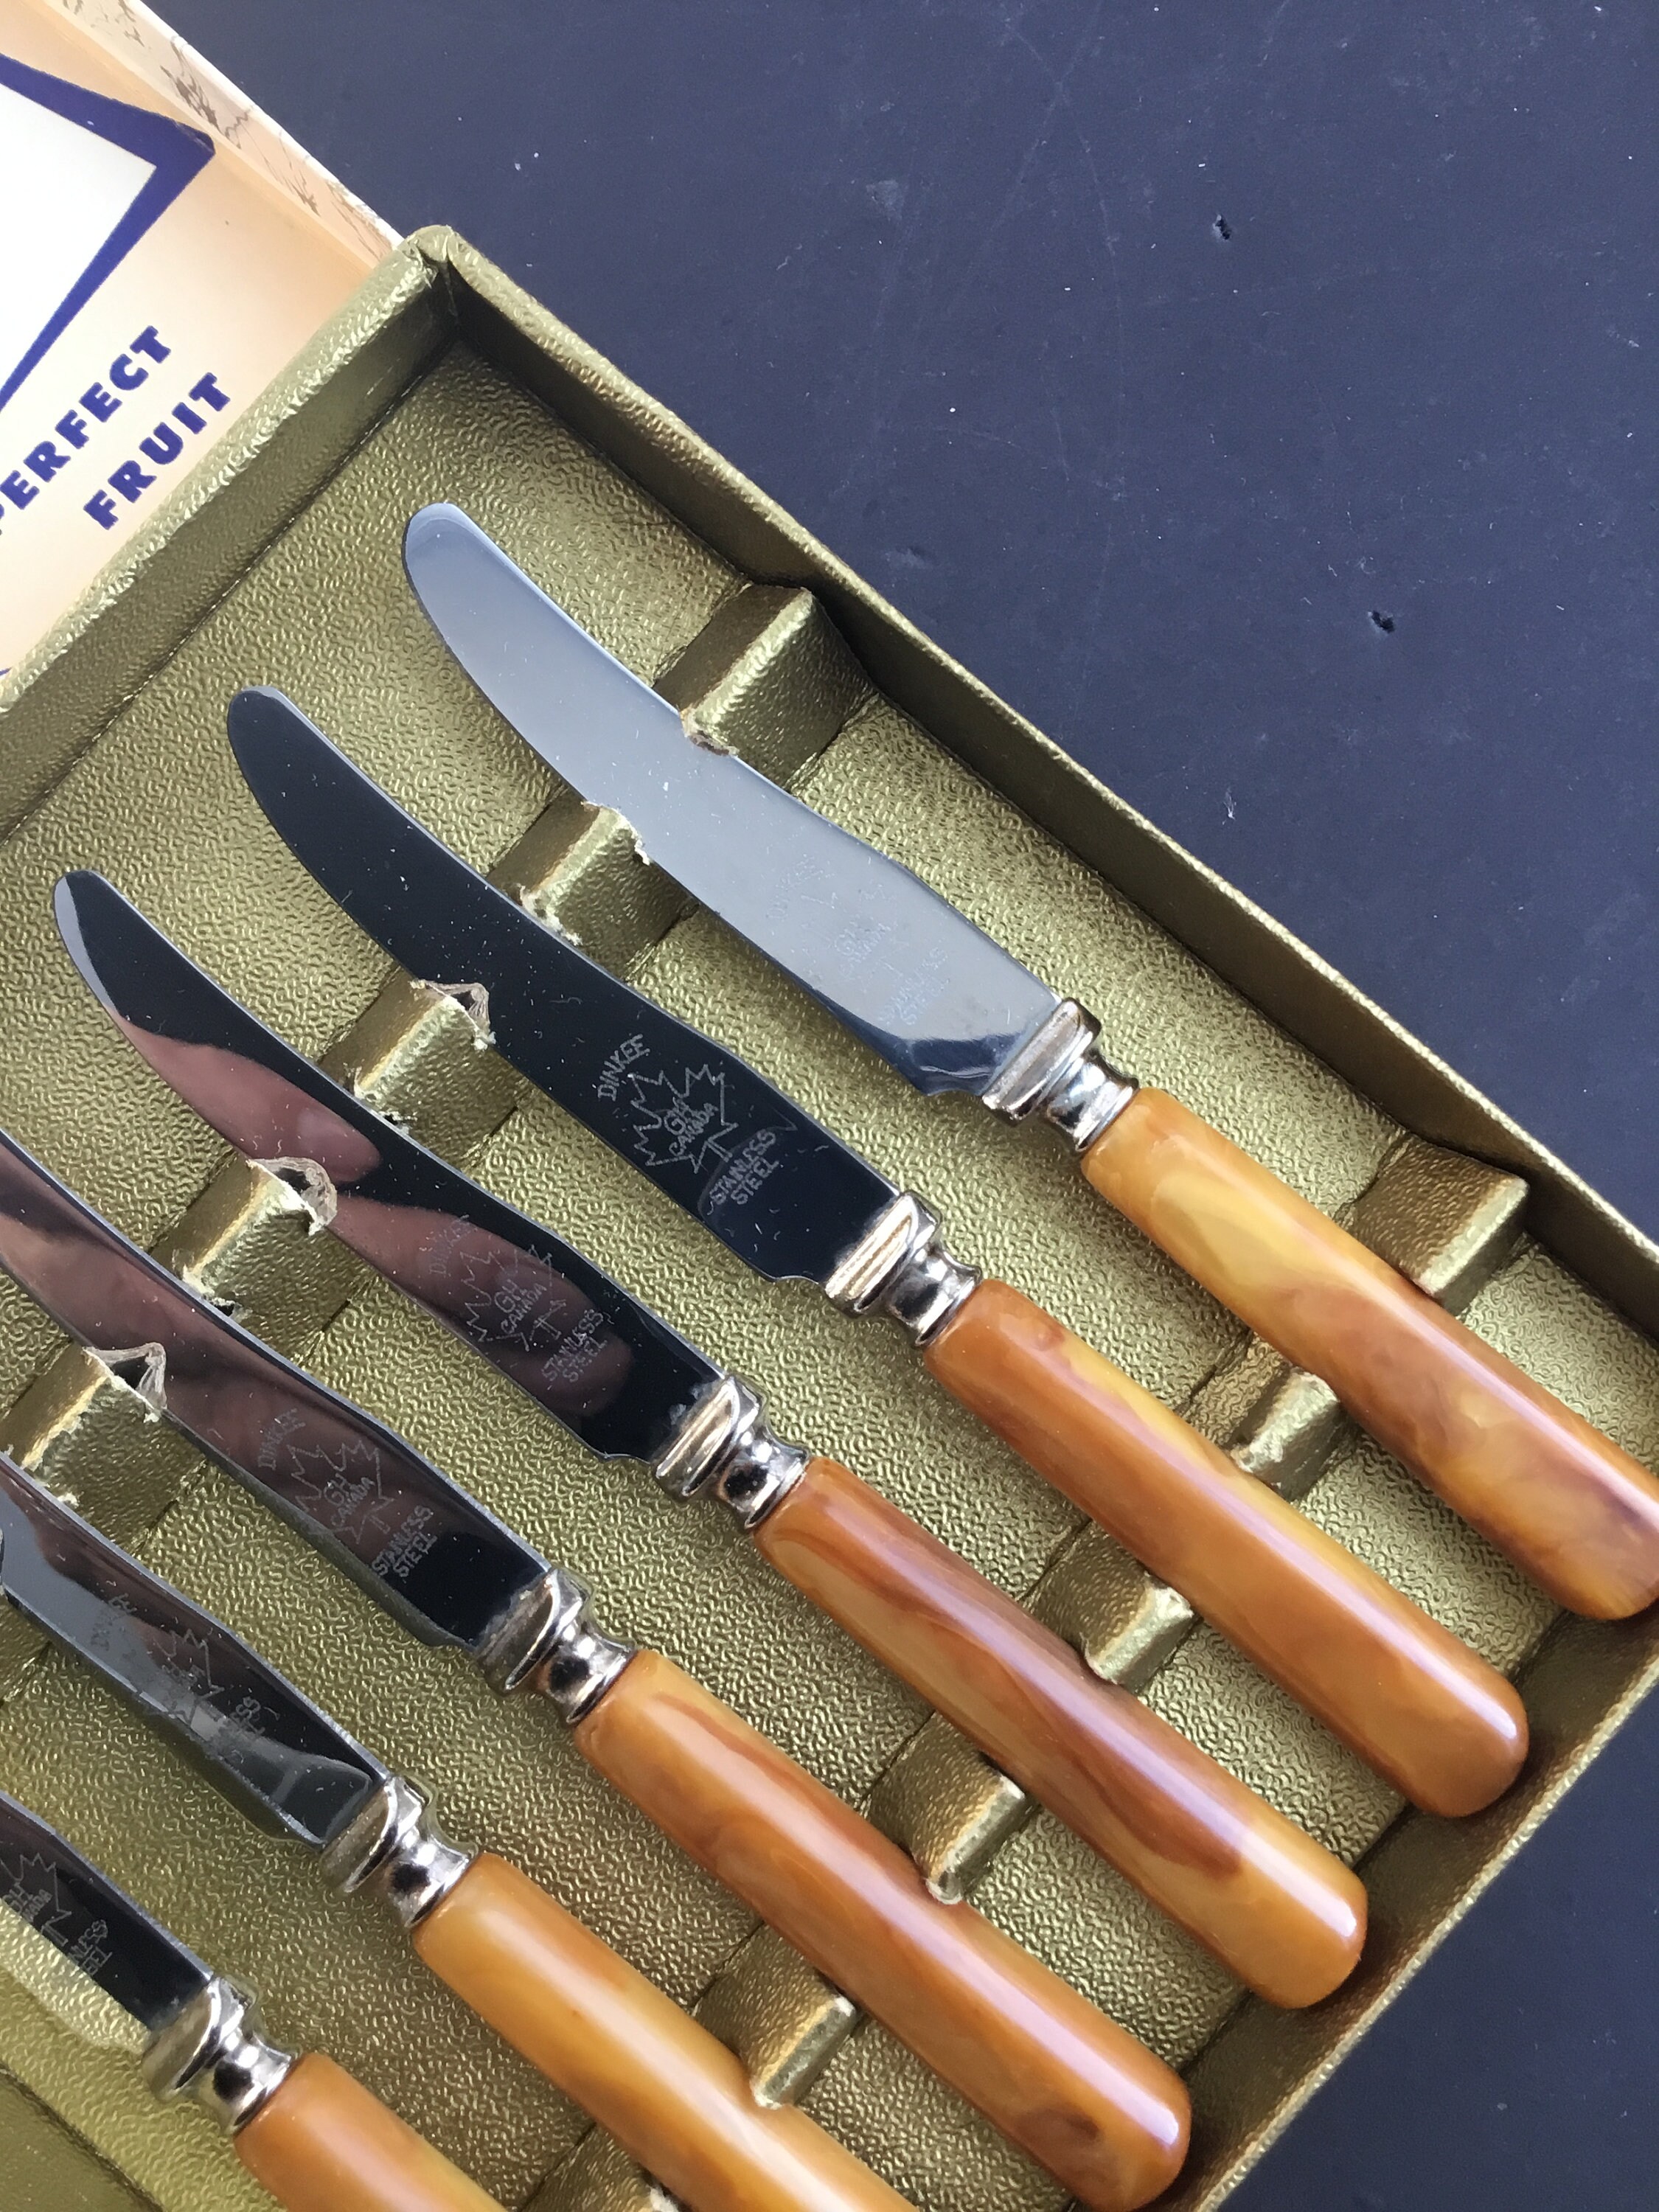 Vintage Dinkee Mini Knife Set, Bakelite Handles, Dinkee Mini Appetizer  Knives 